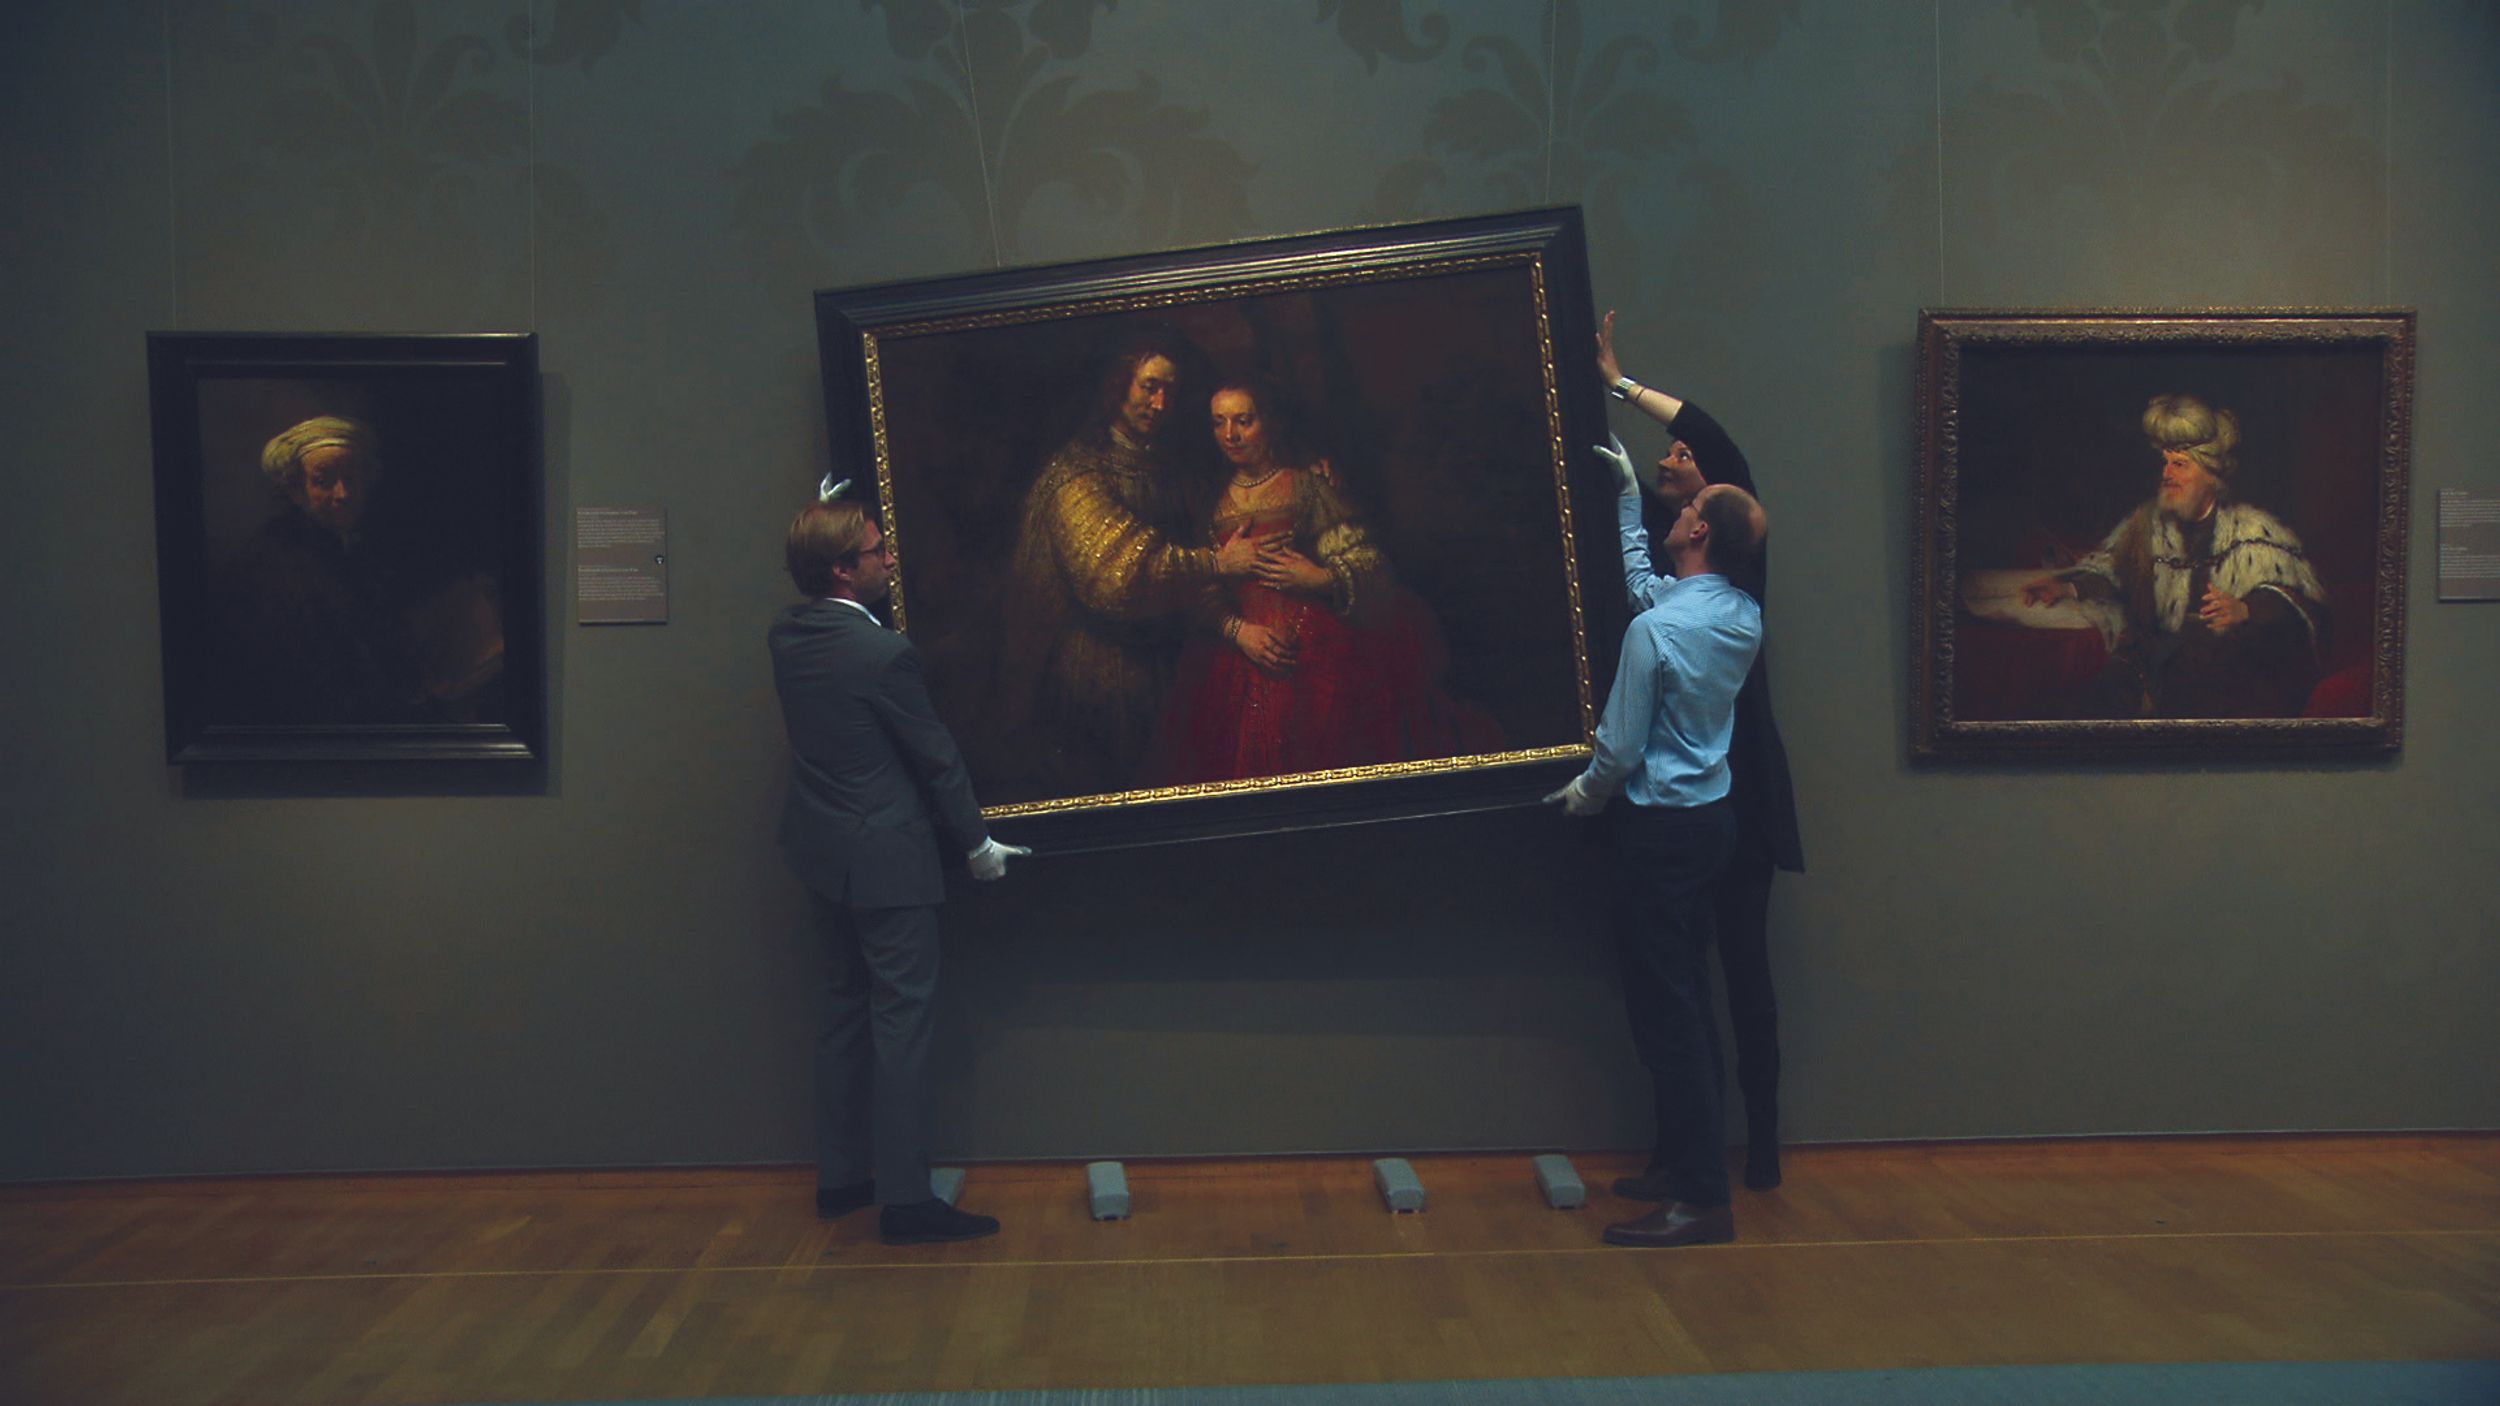 The New Rijksmuseum - The Film